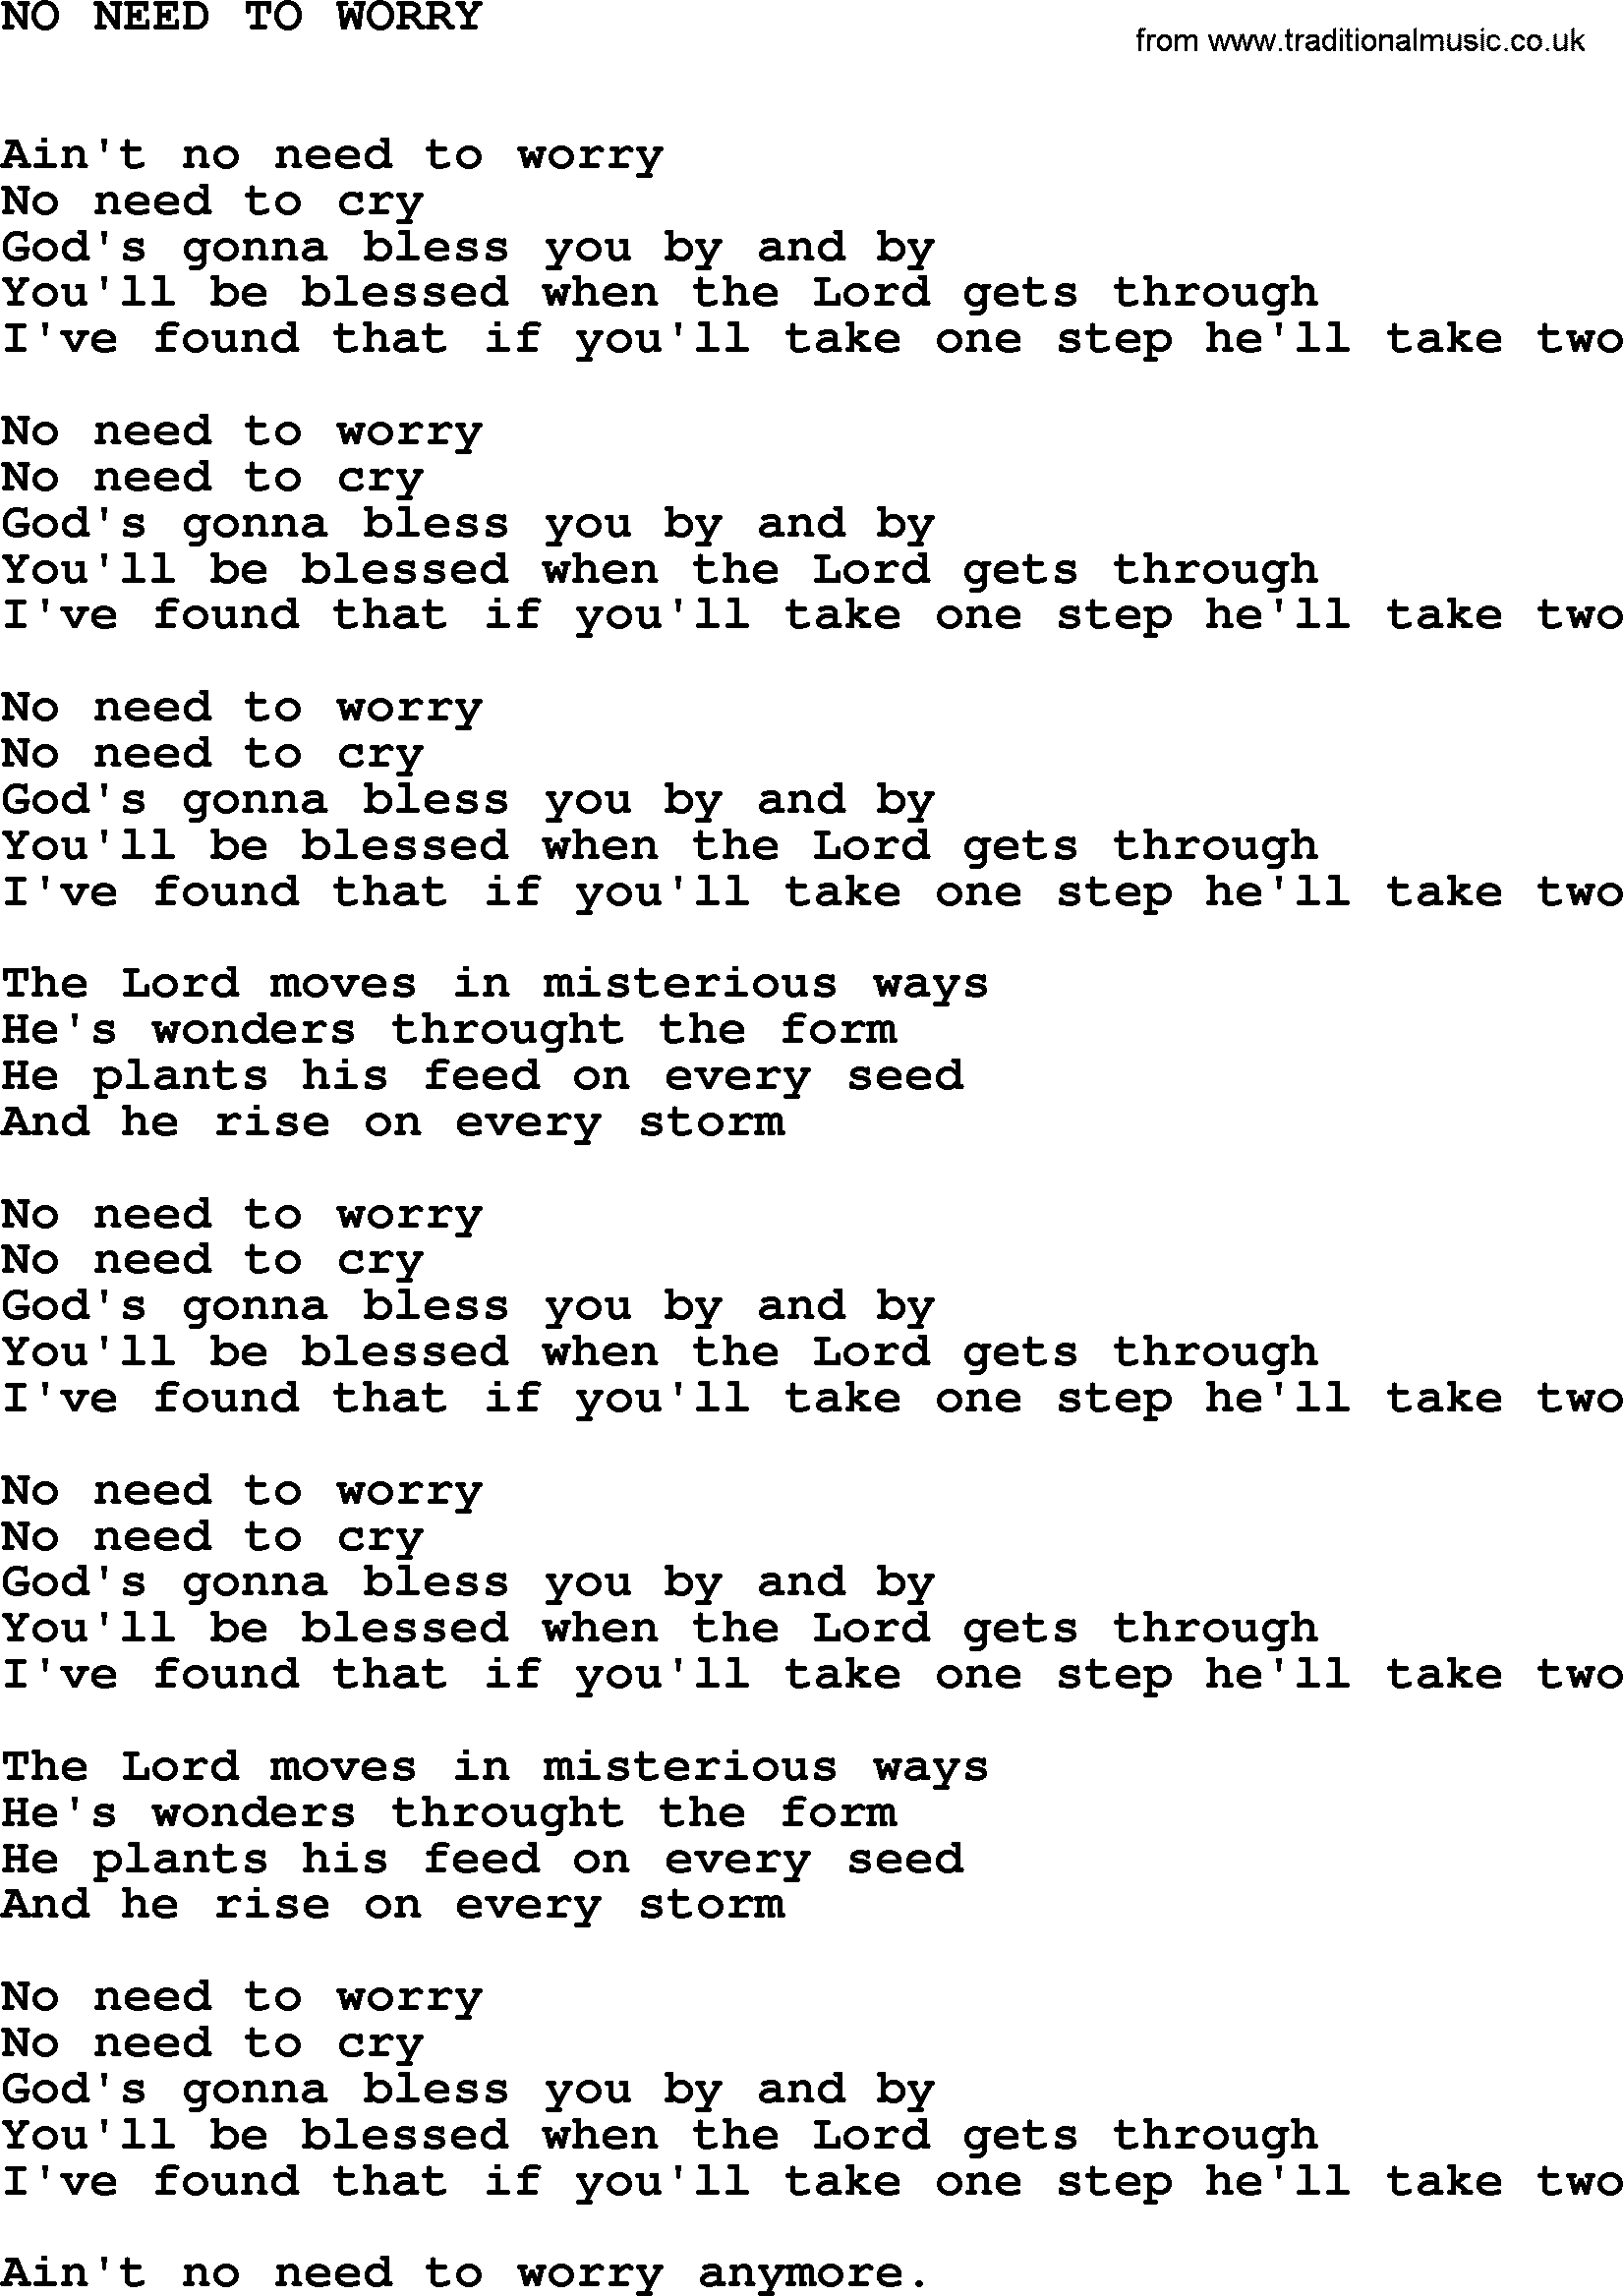 Johnny Cash song No Need To Worry.txt lyrics